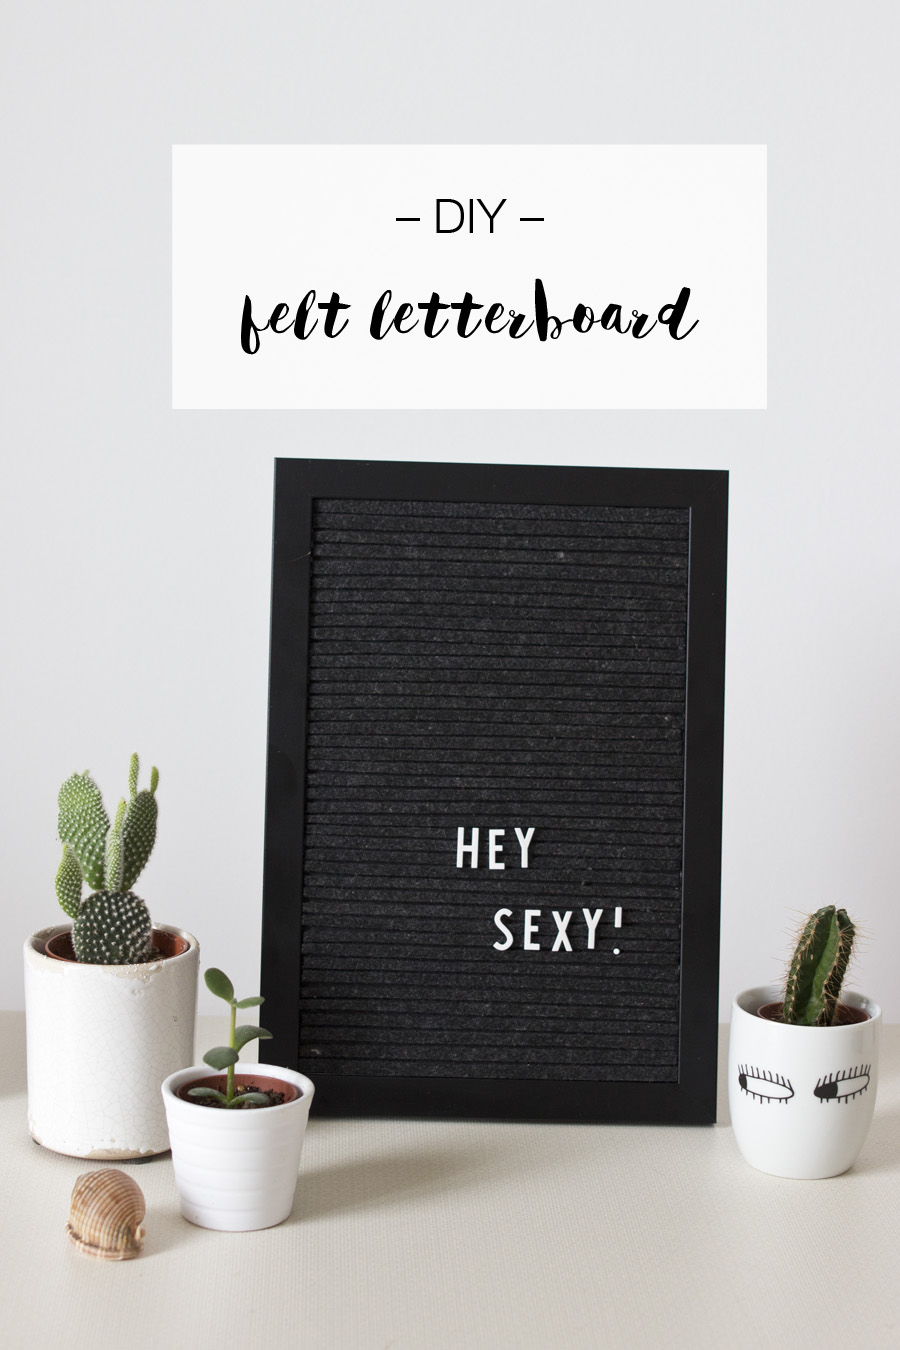 DIY felt letterboard tutorial | LOOK WHAT I MADE ...